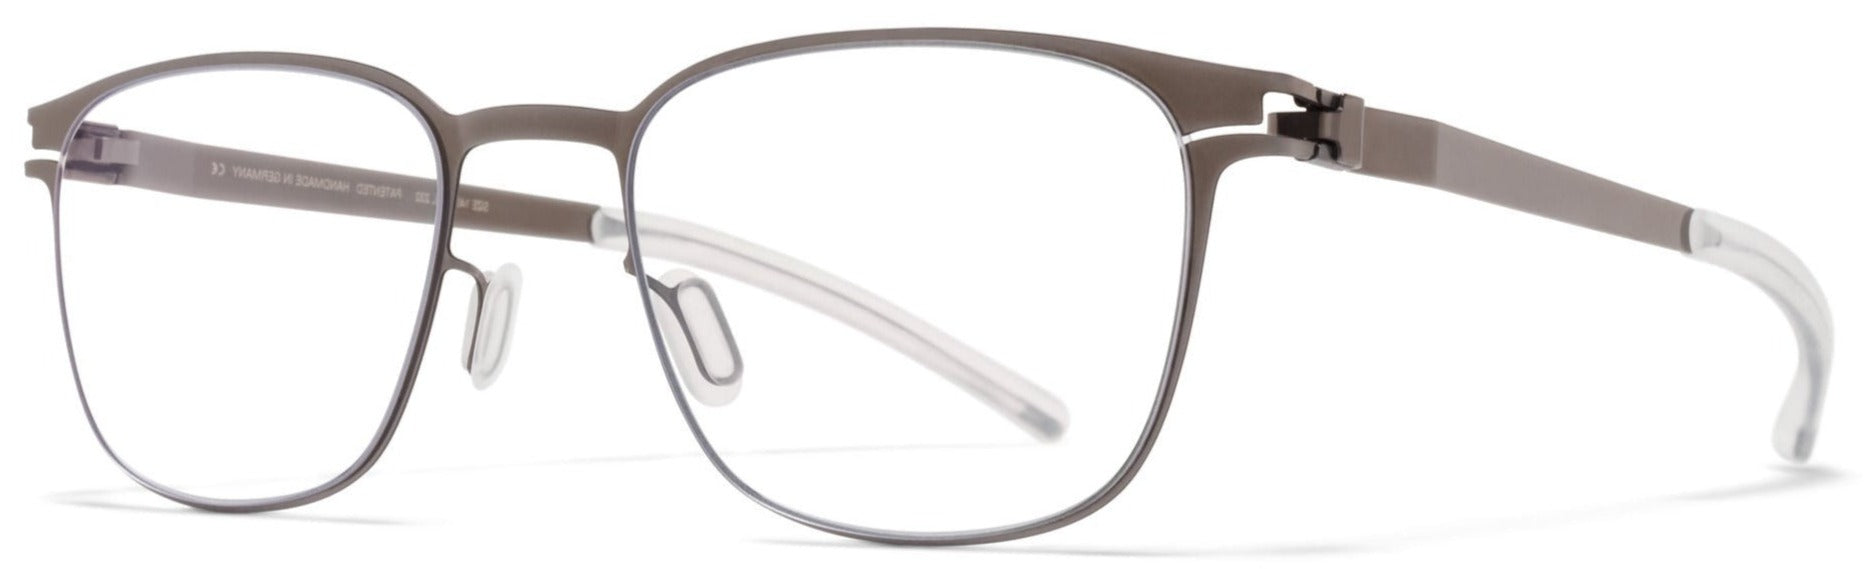 Alexander Daas - Mykita Claude Eyeglasses - Shiny Graphite - Side View